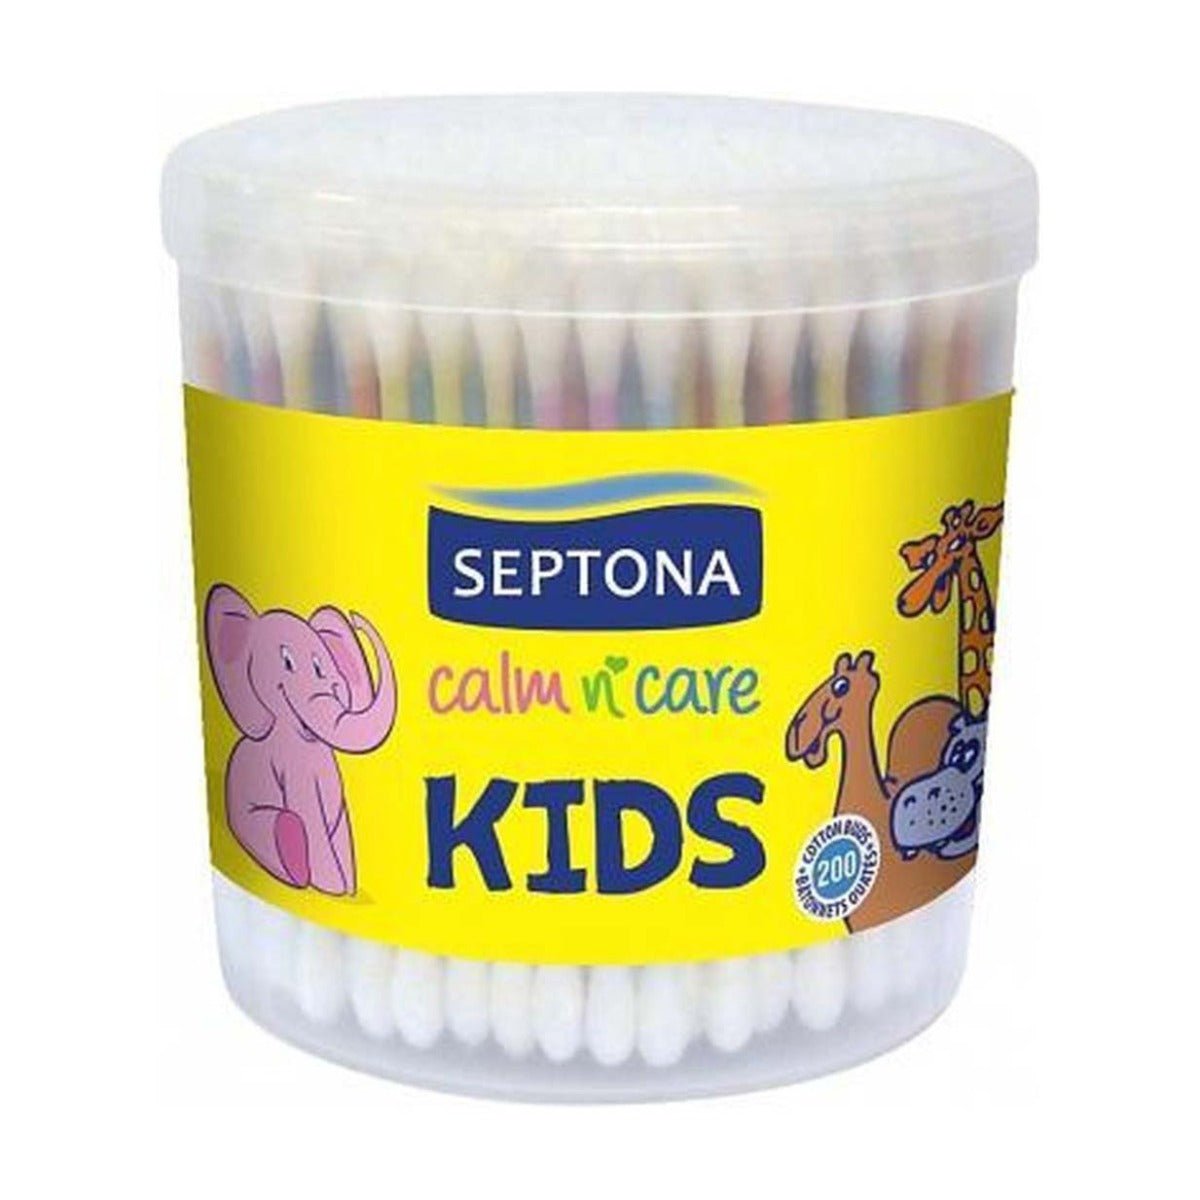 Septona Calm N Care Cotton Ear Buds For Kids - Bloom Pharmacy